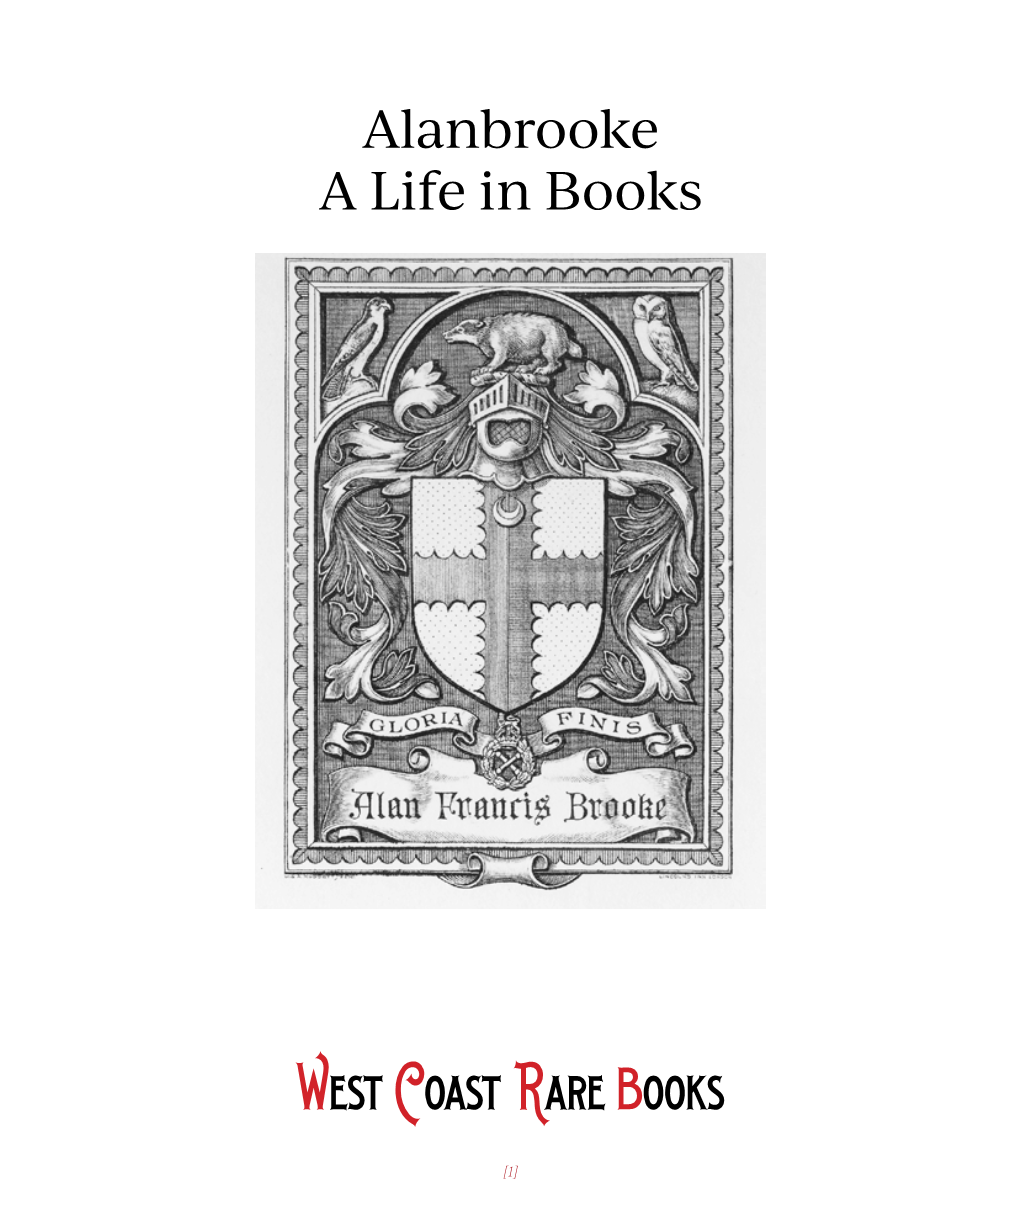 Alanbrooke's War Diaries